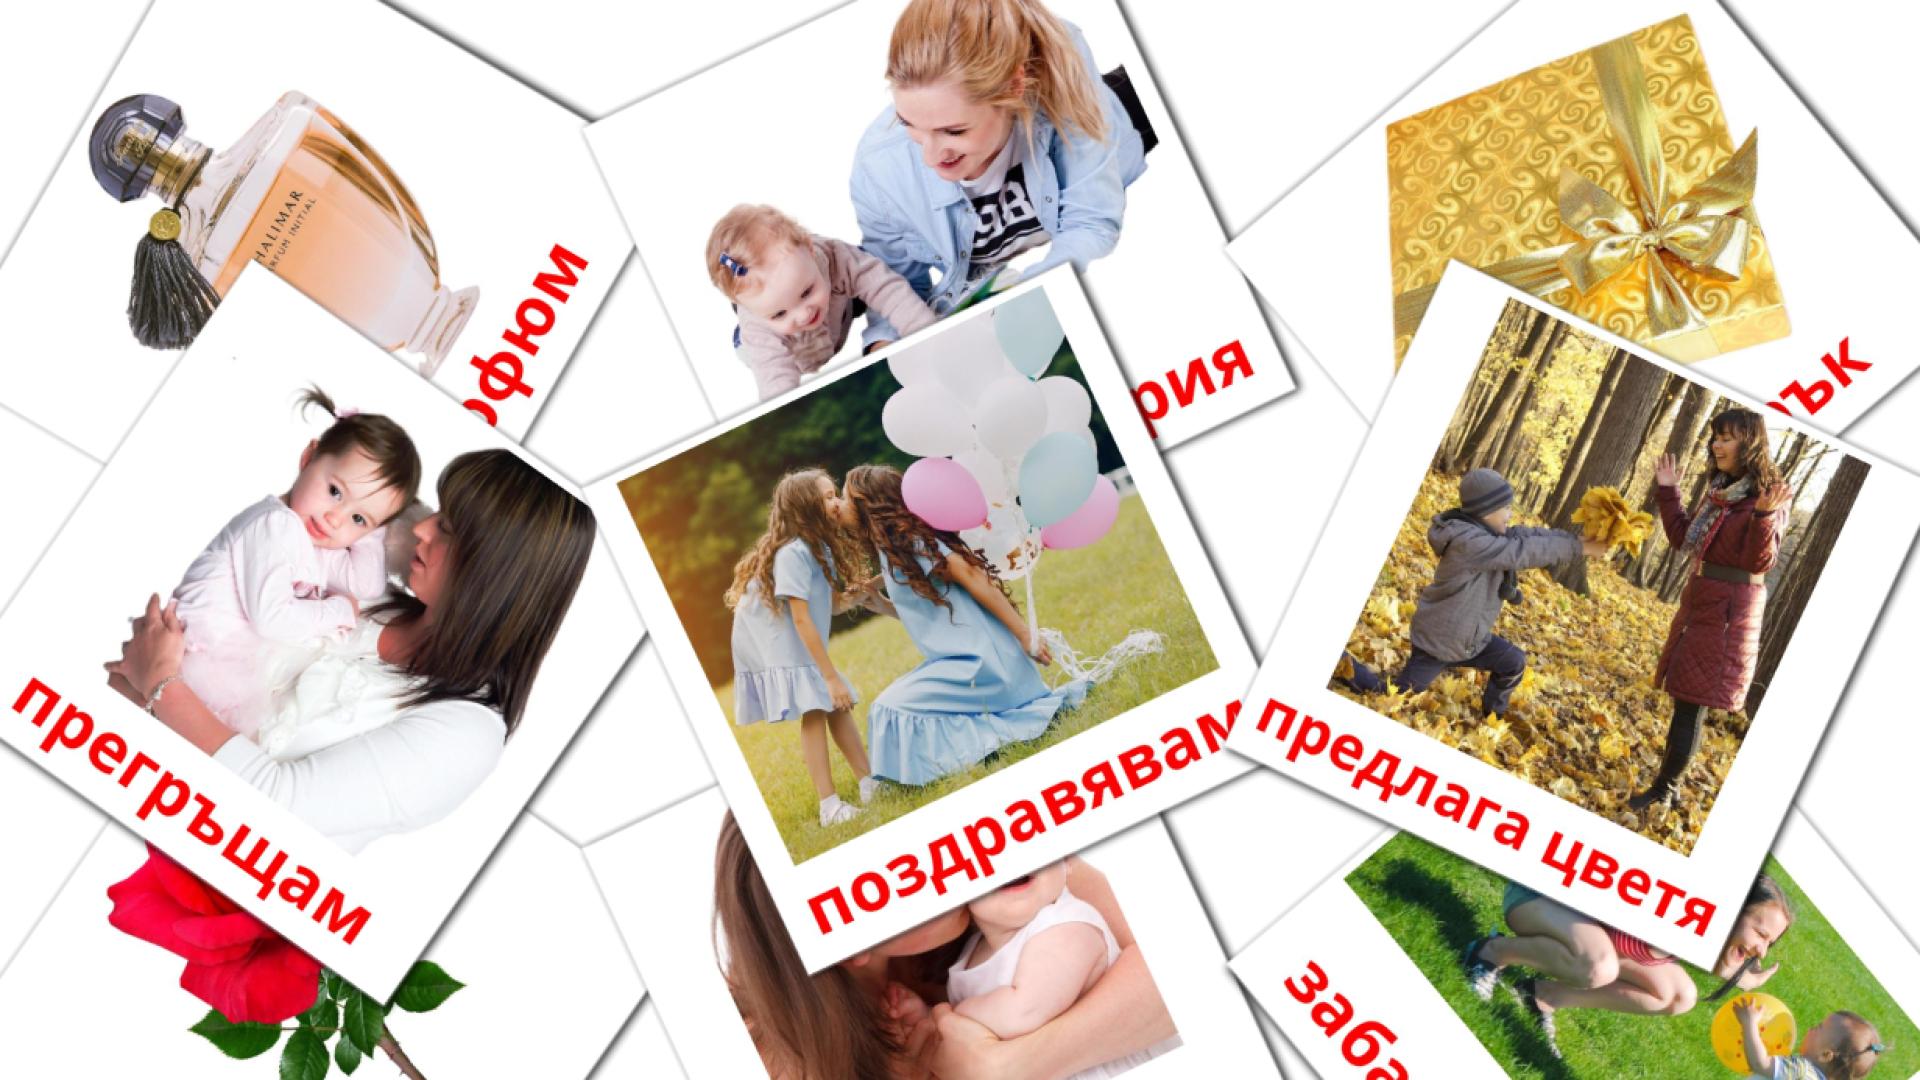 Muttertag - Bulgarisch Vokabelkarten